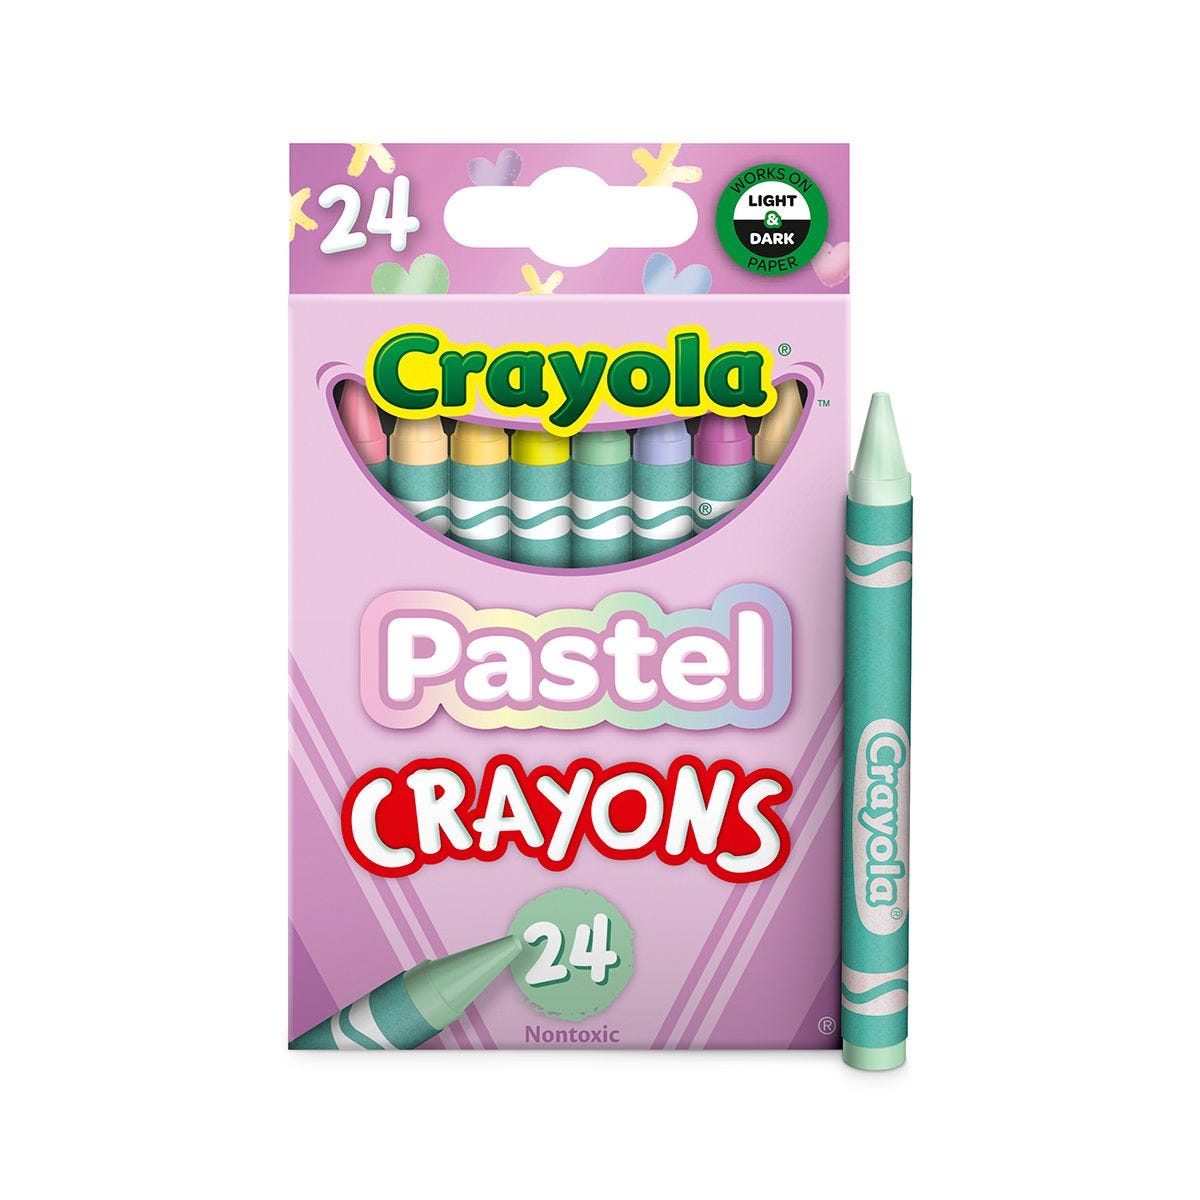 Crayola® Pastel Crayons - 24 Pack